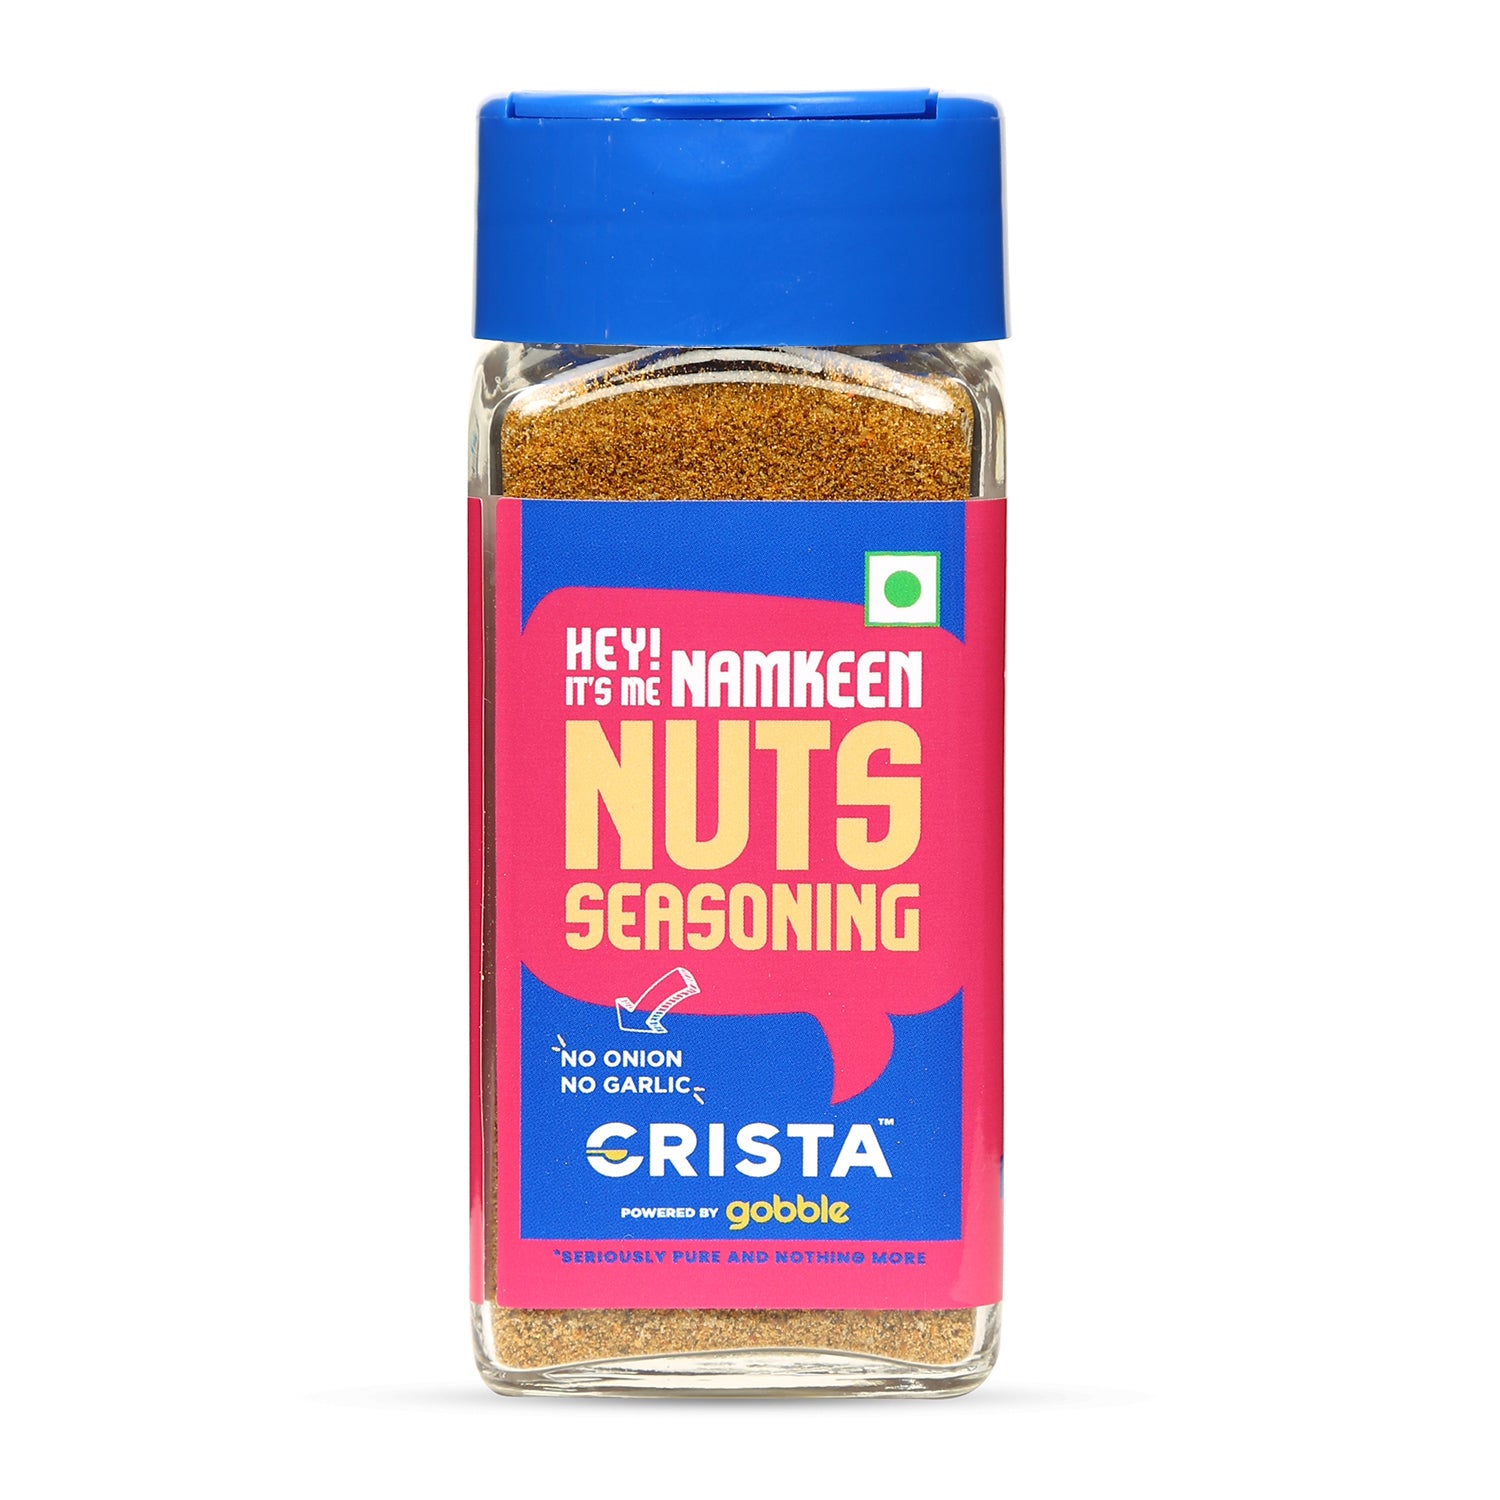 CRISTA Namkeen Nuts Seasoning